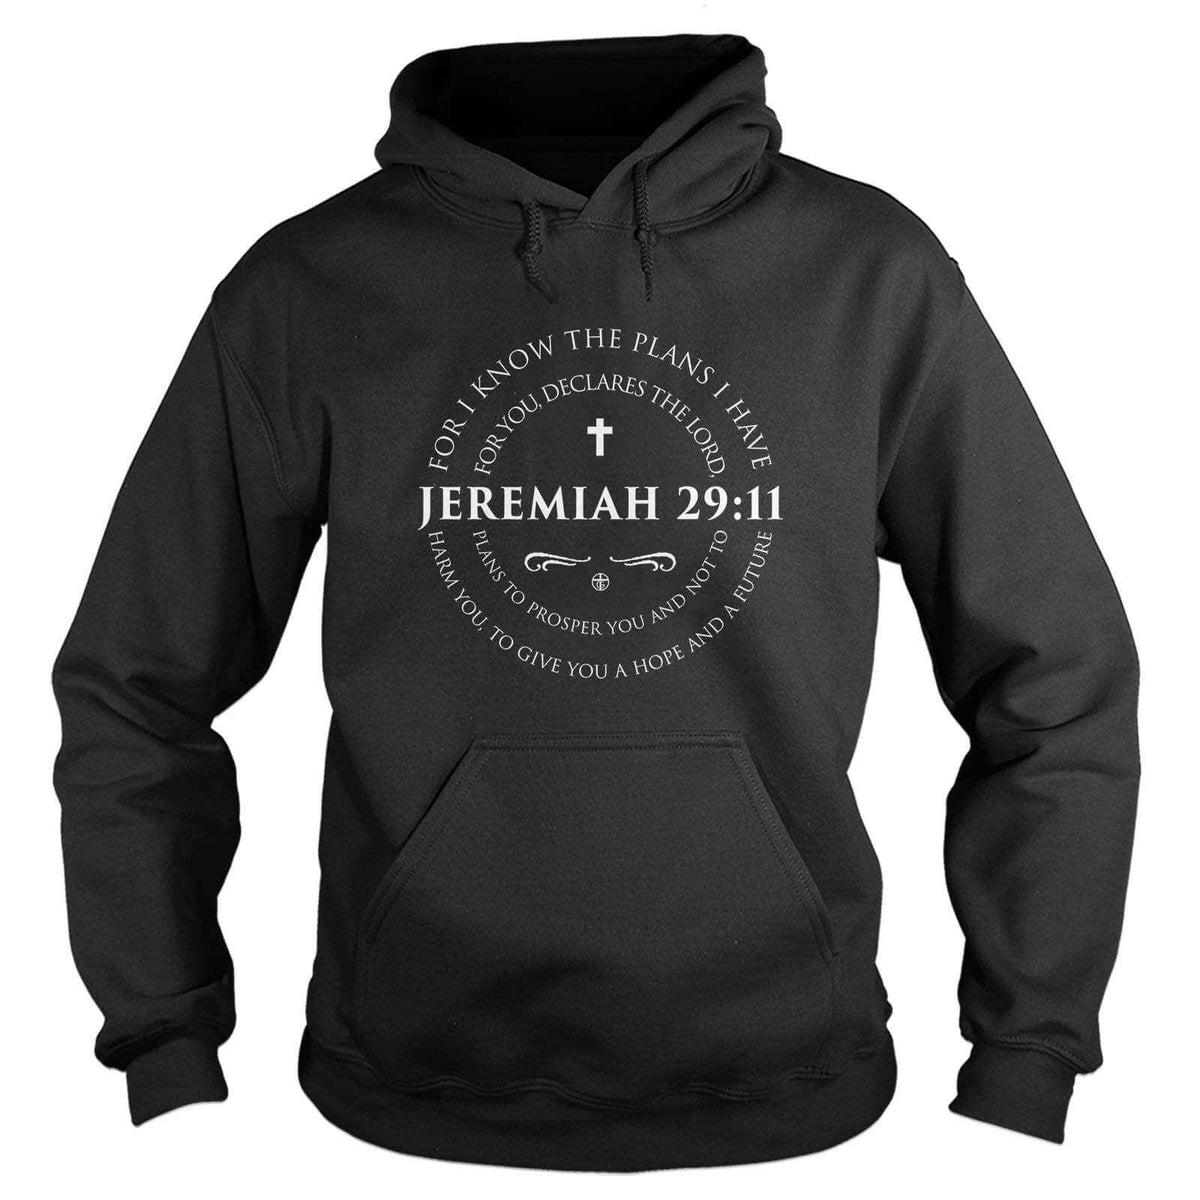 Jeremiah 29:11 Hoodie - Our True God